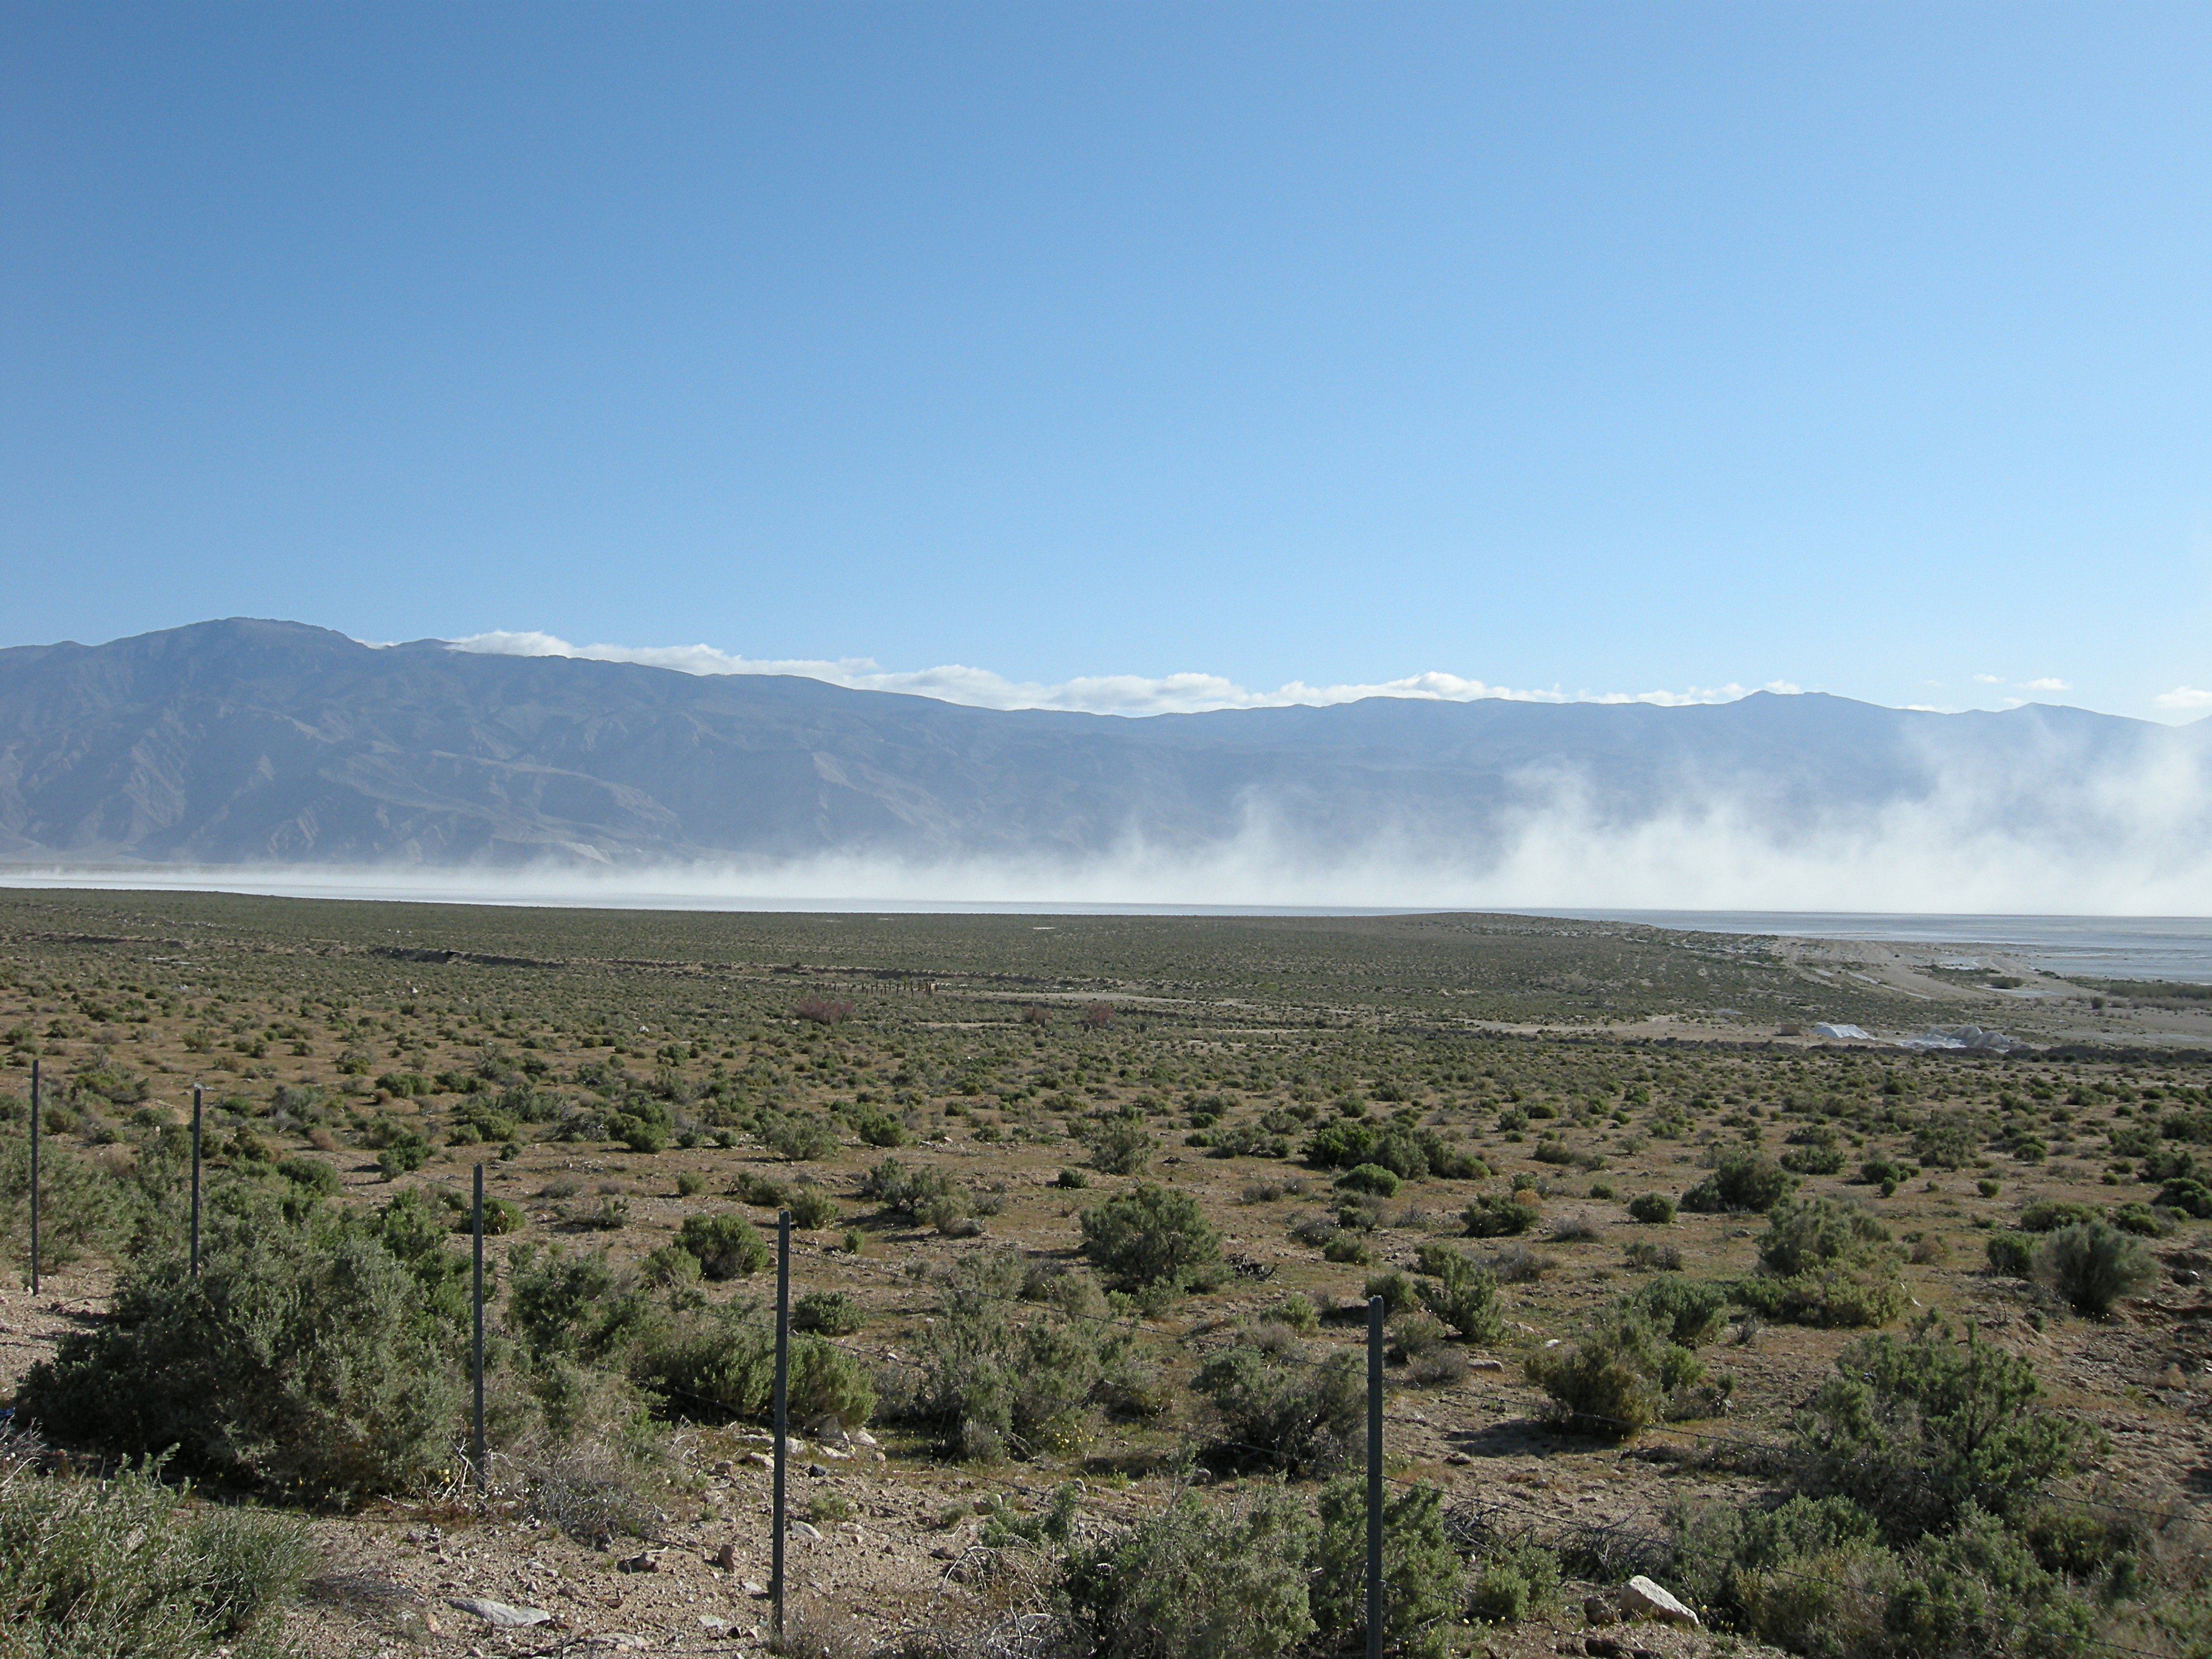 Blowing Alkali Dust at Owens Lake